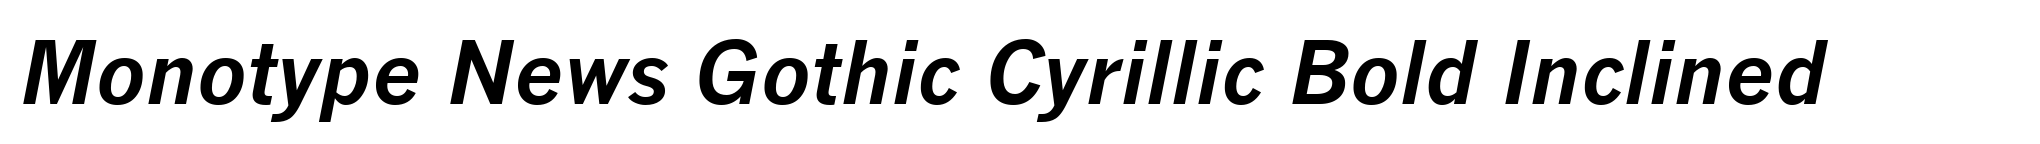 Monotype News Gothic Cyrillic Bold Inclined image